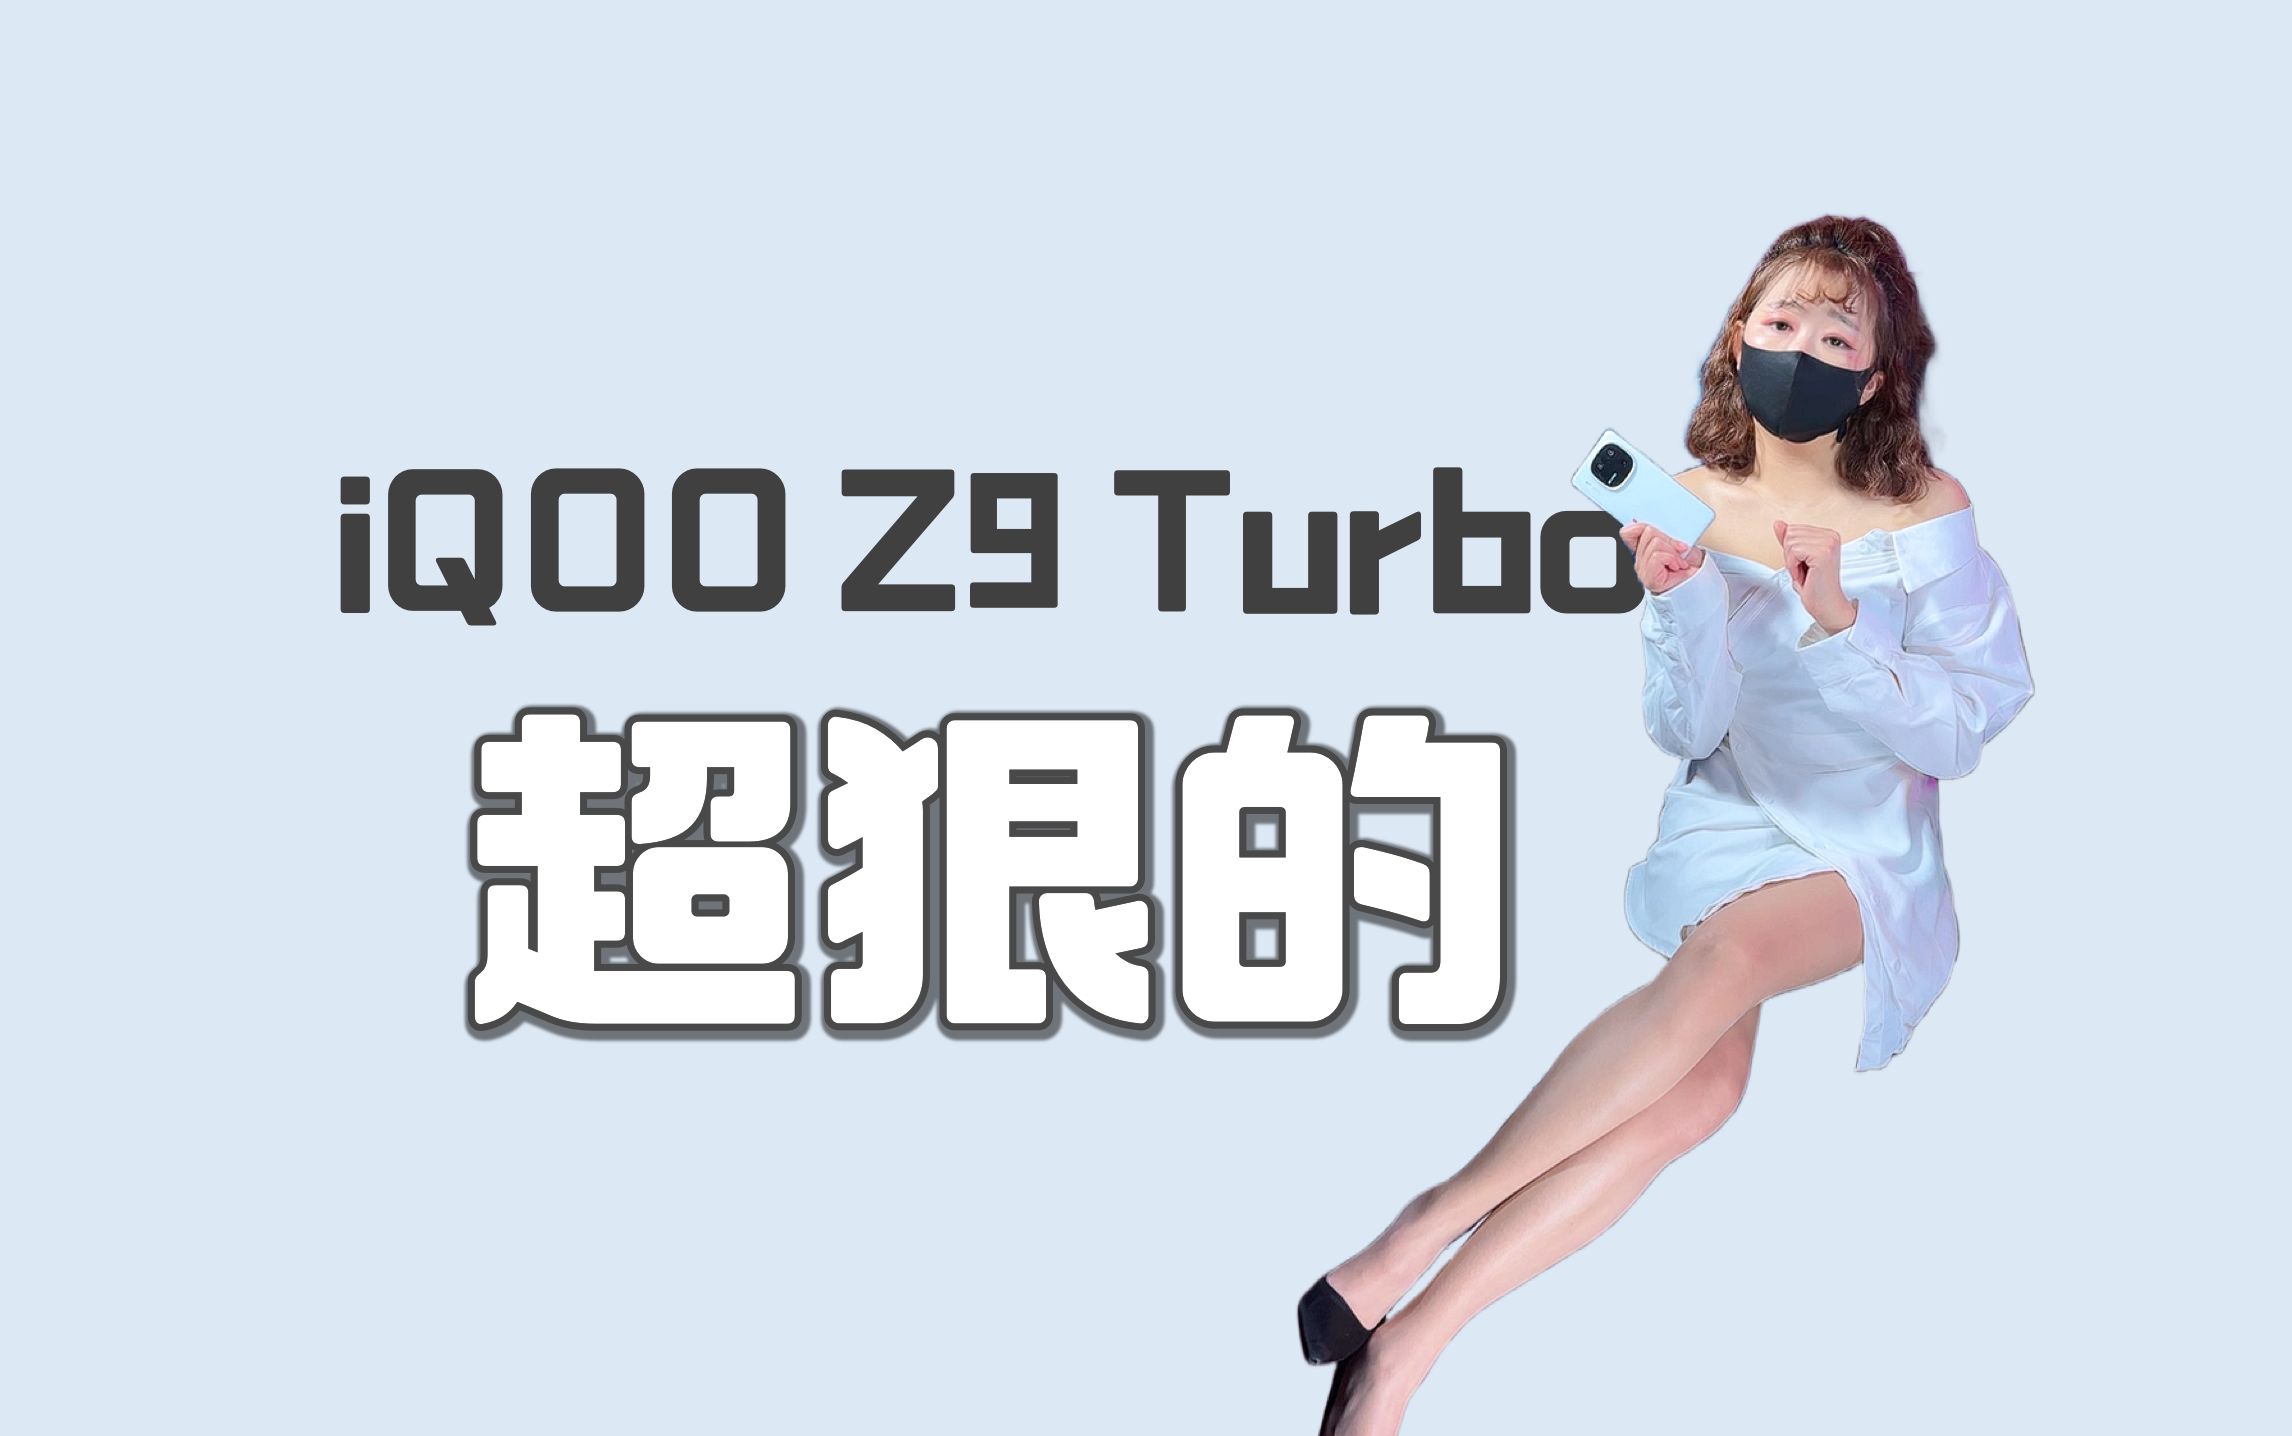 iQOO Z9 Turbo够狠的#iqooz9turbo #iqoo